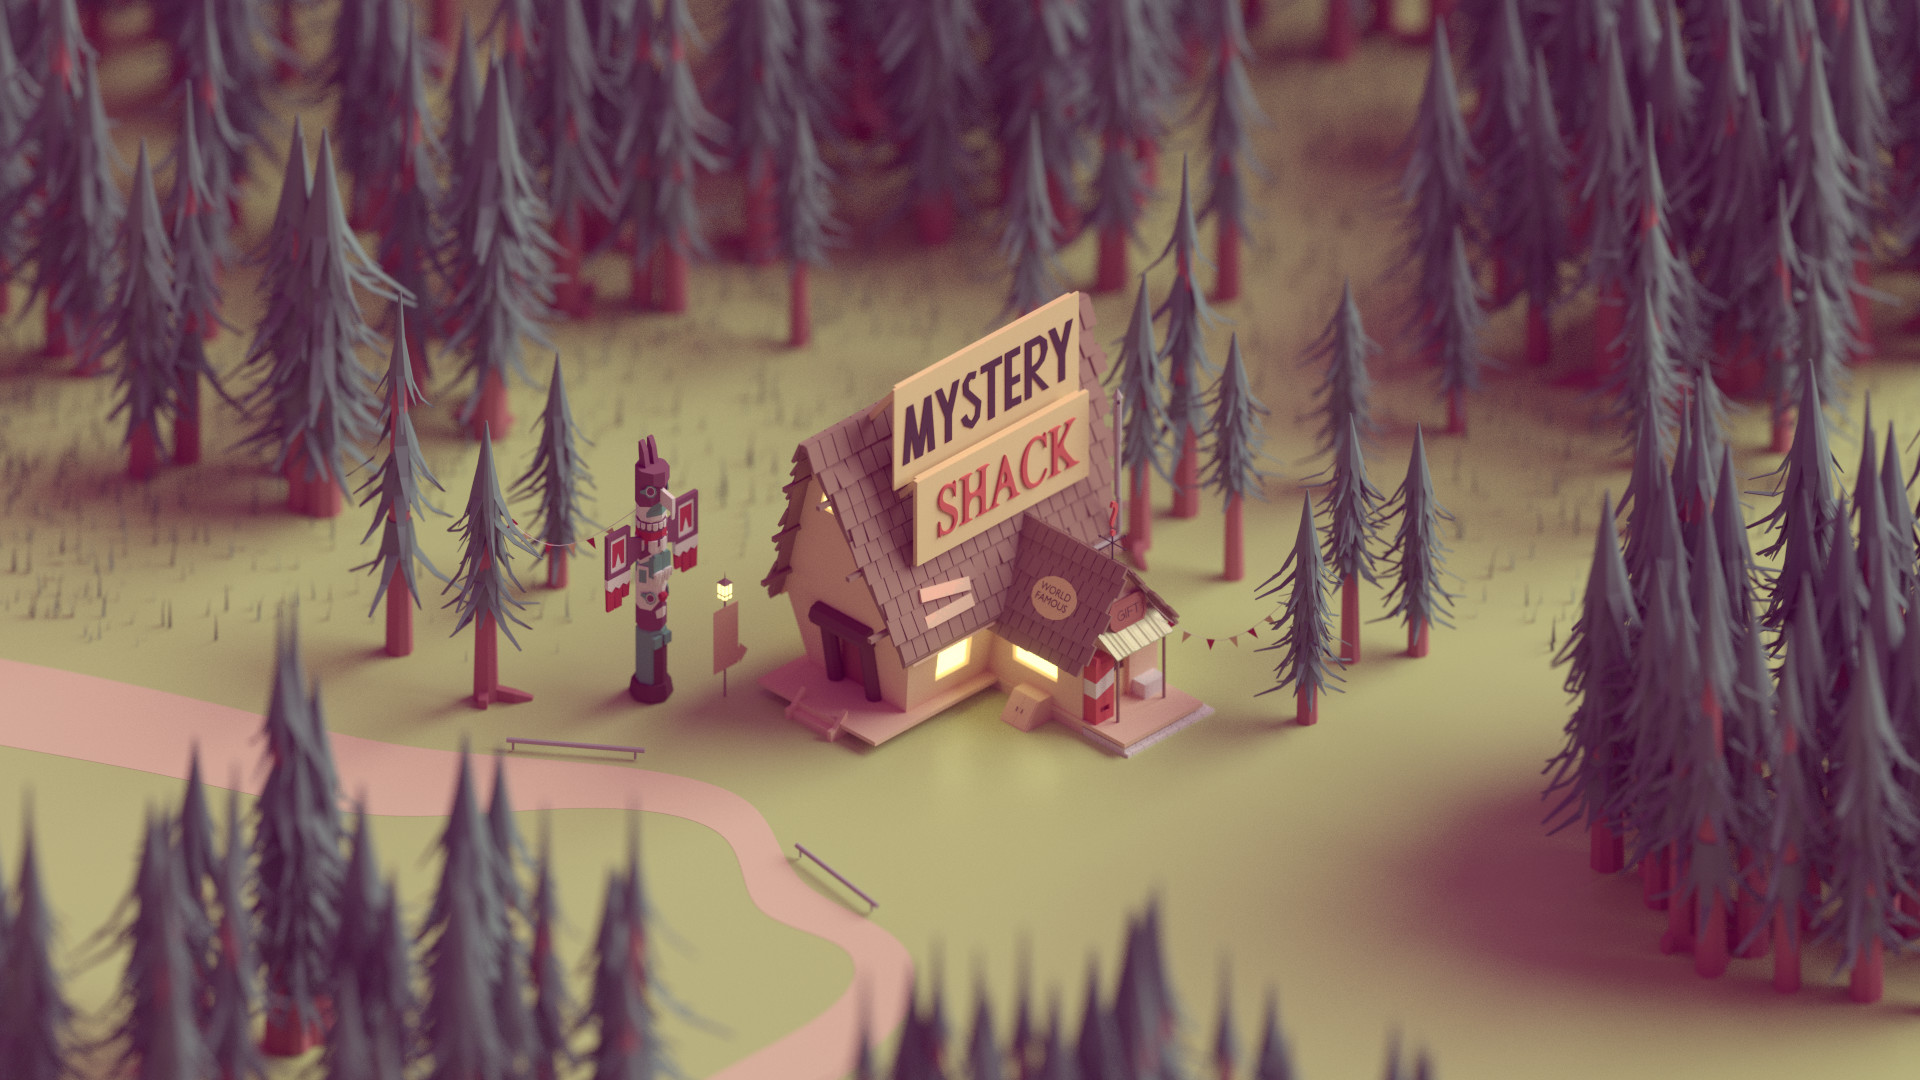 Gravity Falls Mystery shack